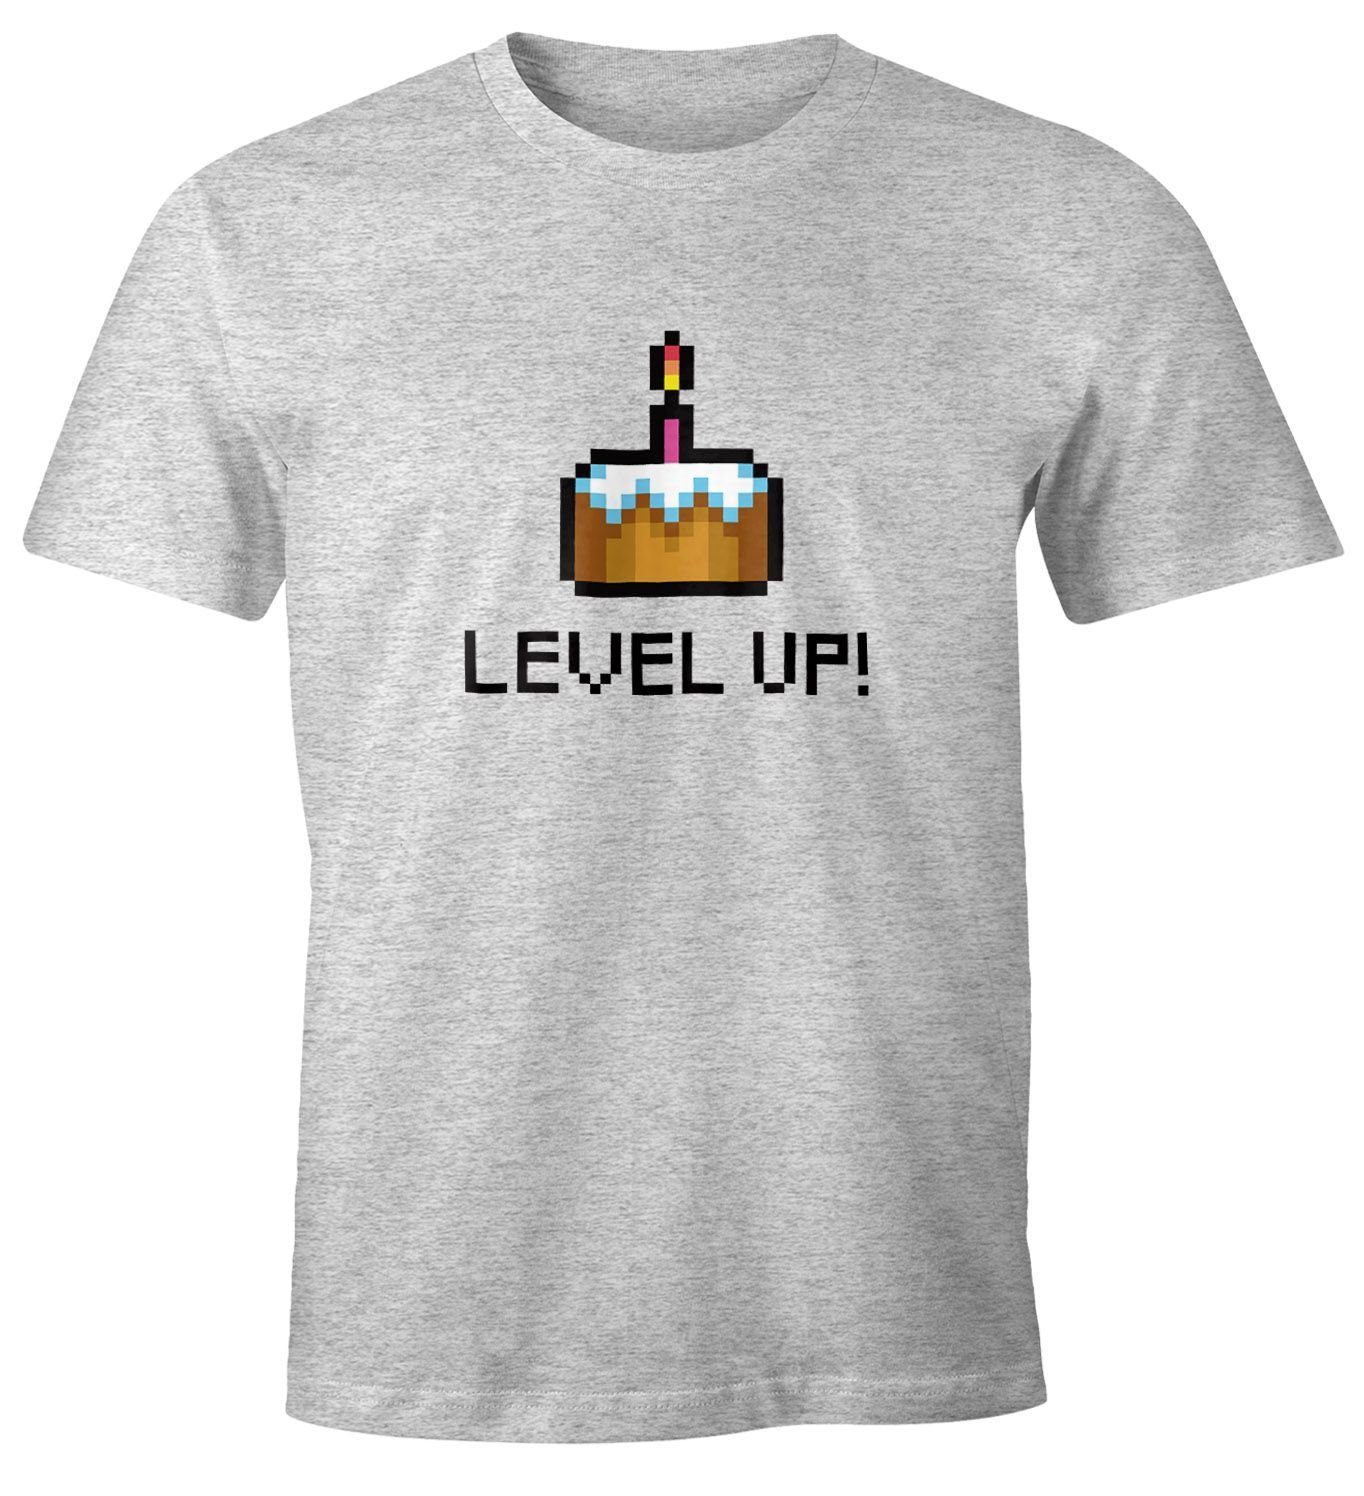 MoonWorks Print-Shirt Herren T-Shirt Geburtstag Level Up Pixel-Torte Retro Gamer Pixelgrafik Geschenk Arcade Fun-Shirt Moonworks® mit Print grau